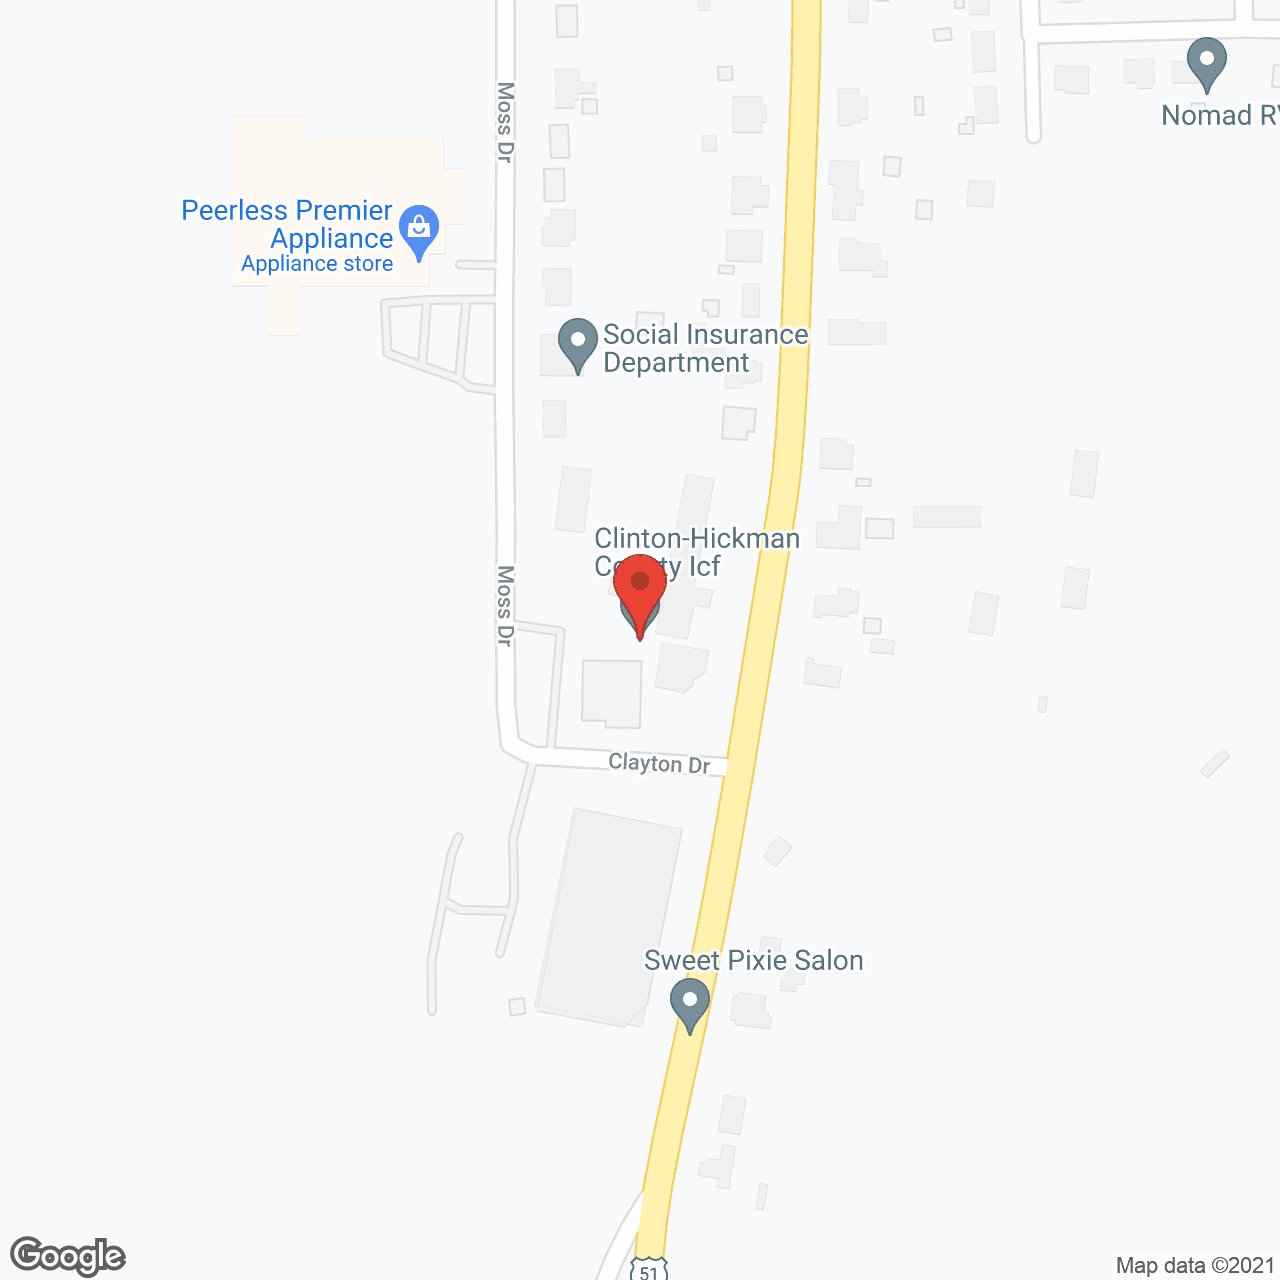 Clinton-Hickman County Icf in google map